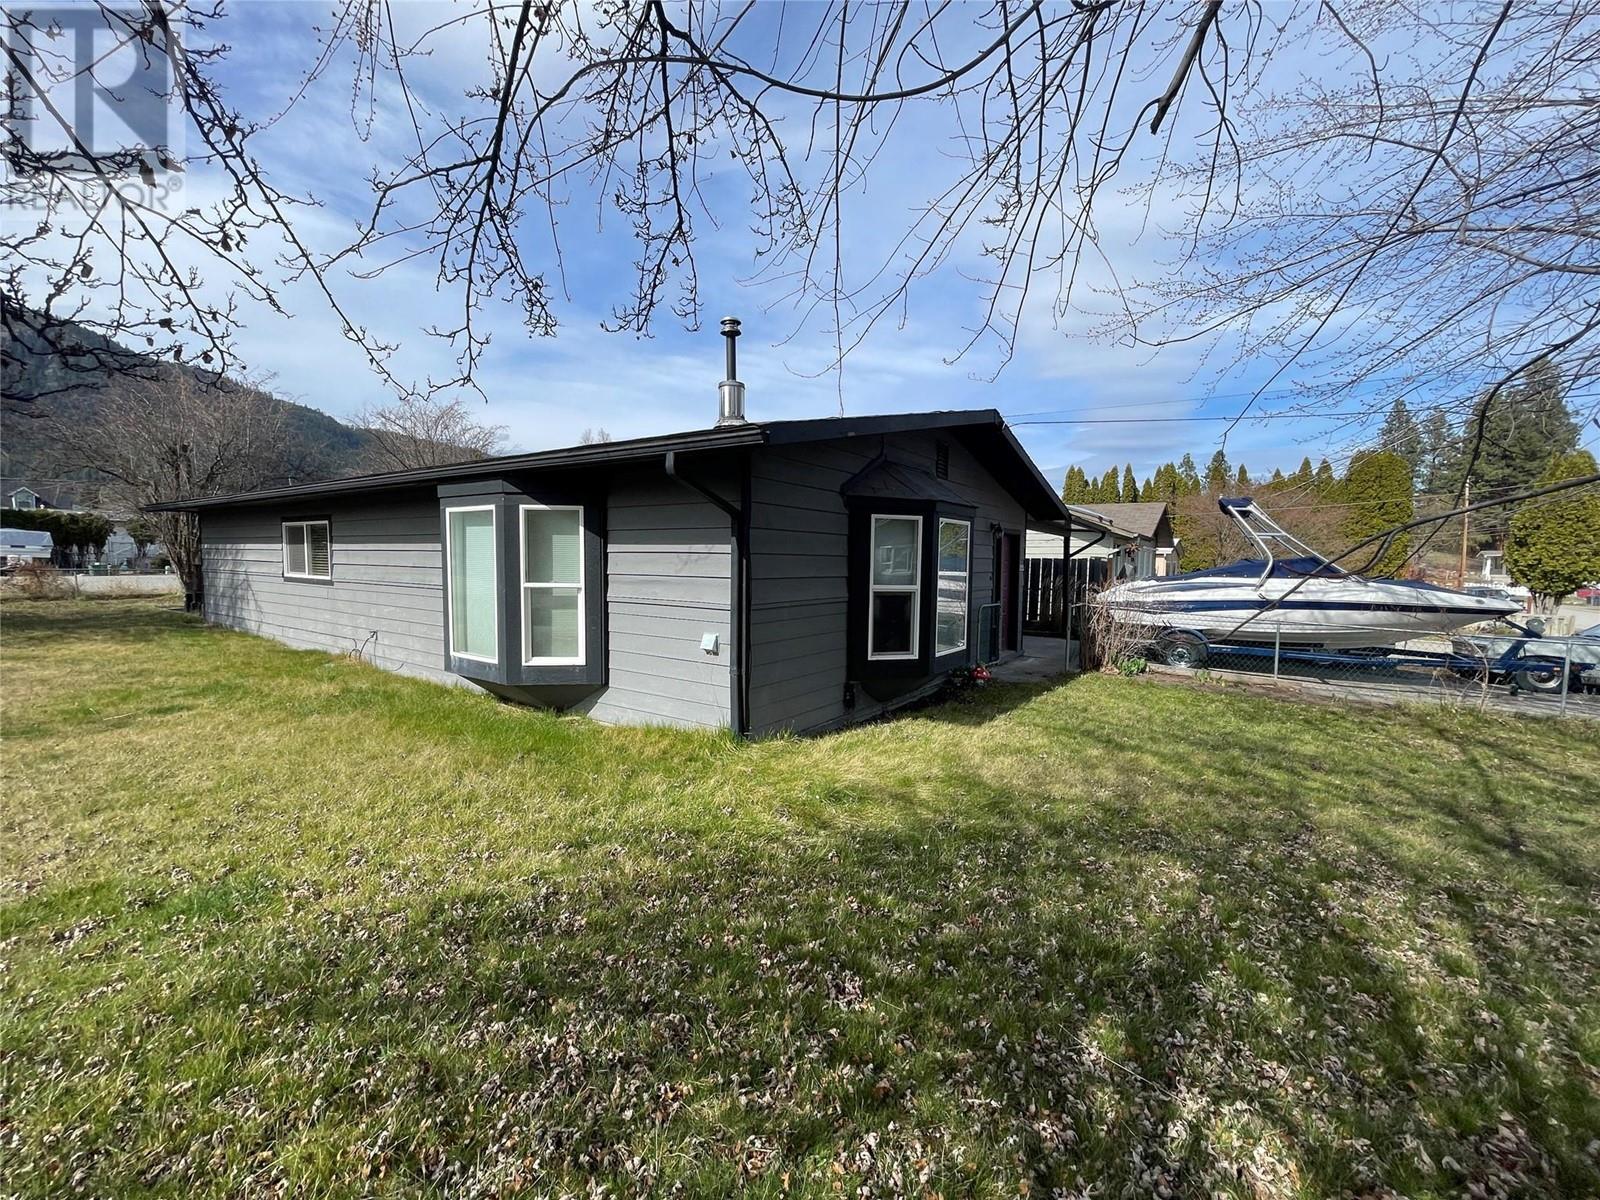 Okanagan Falls House for sale:  3 bedroom 1,200 sq.ft. (Listed 2106-02-06)